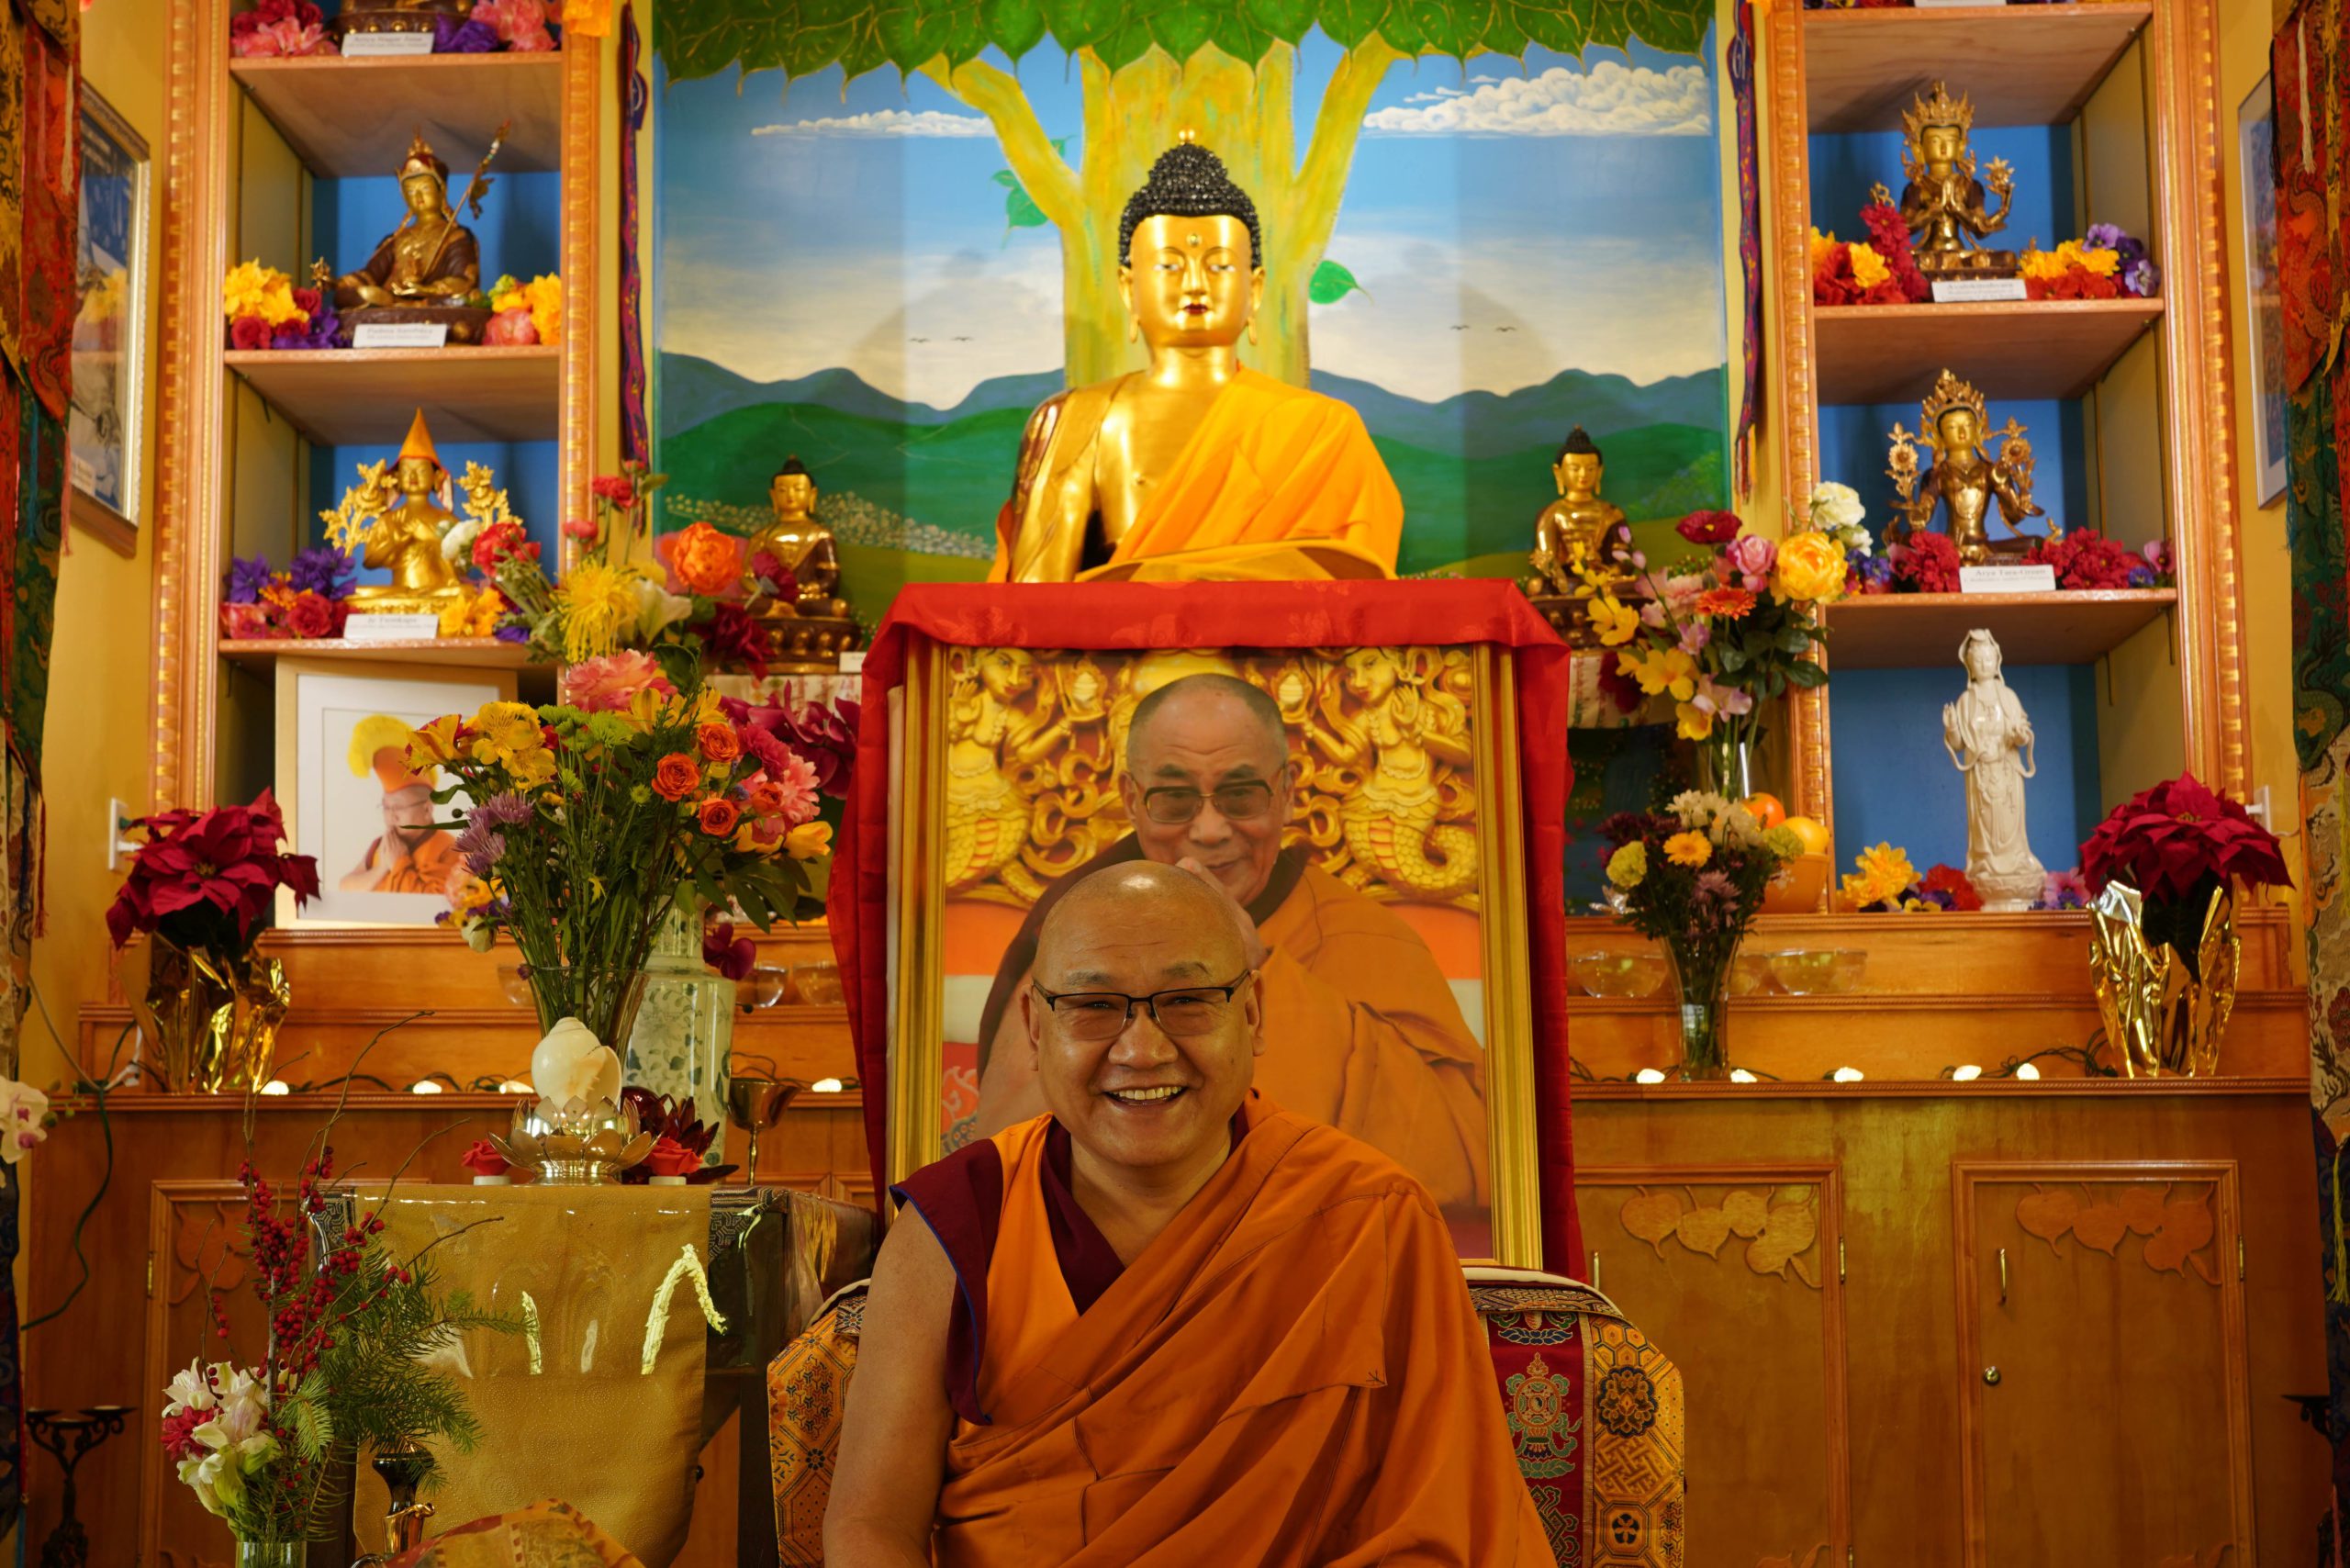 Geshe Phelgye teaching at the Buddhist Institute, a Tibetan Buddhist temple in Spokane, WA.